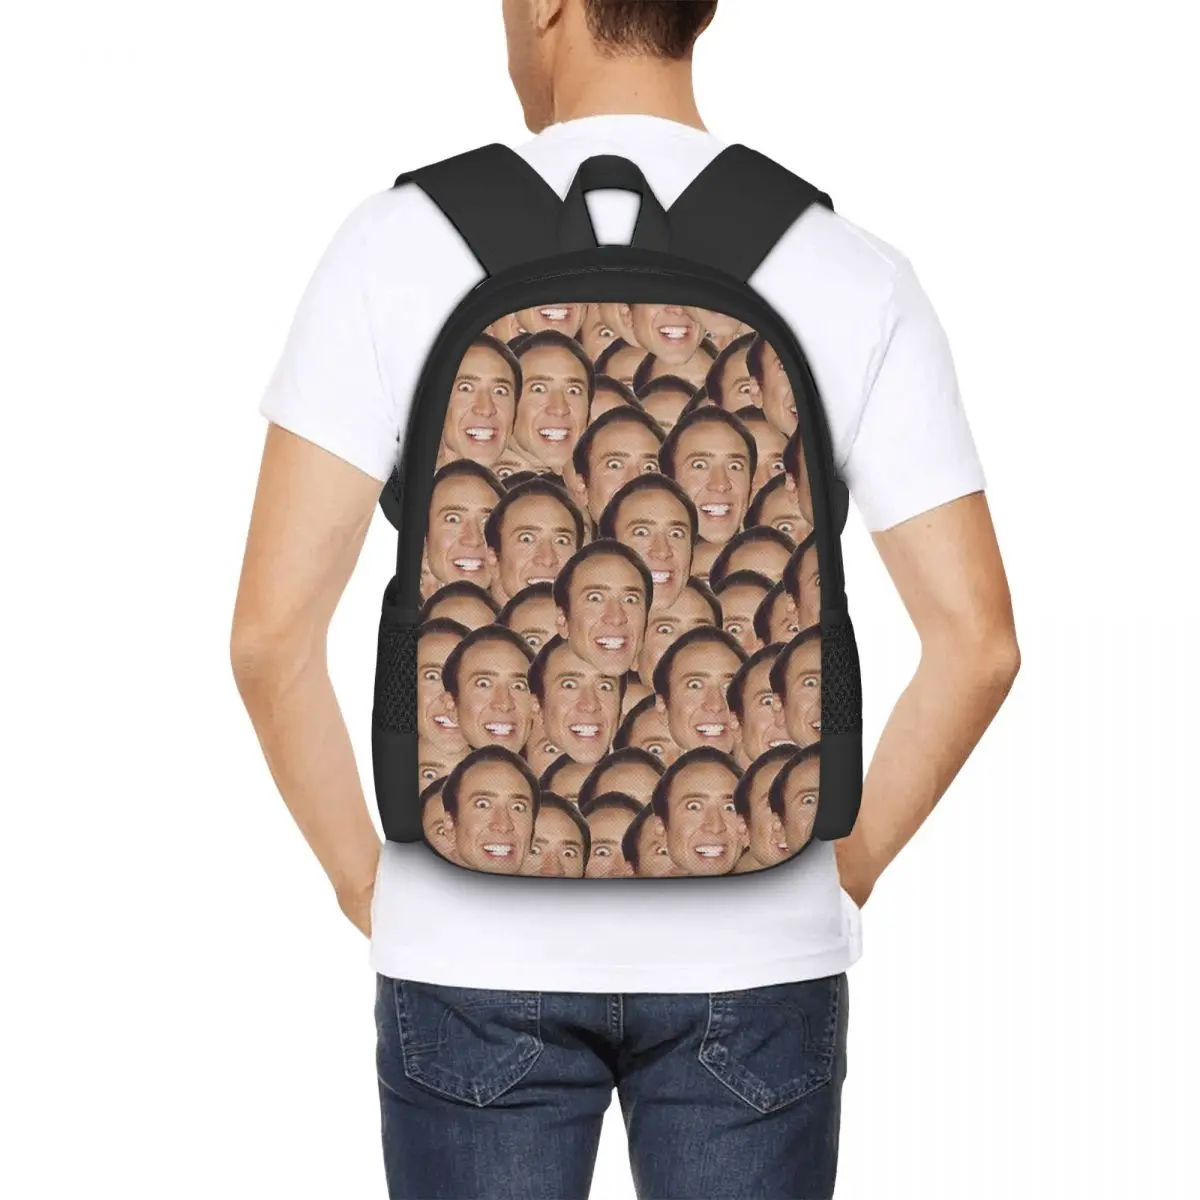 Nicolas Cage Meme Backpack for Girls Boys Travel RucksackBackpacks for Teenage school bag